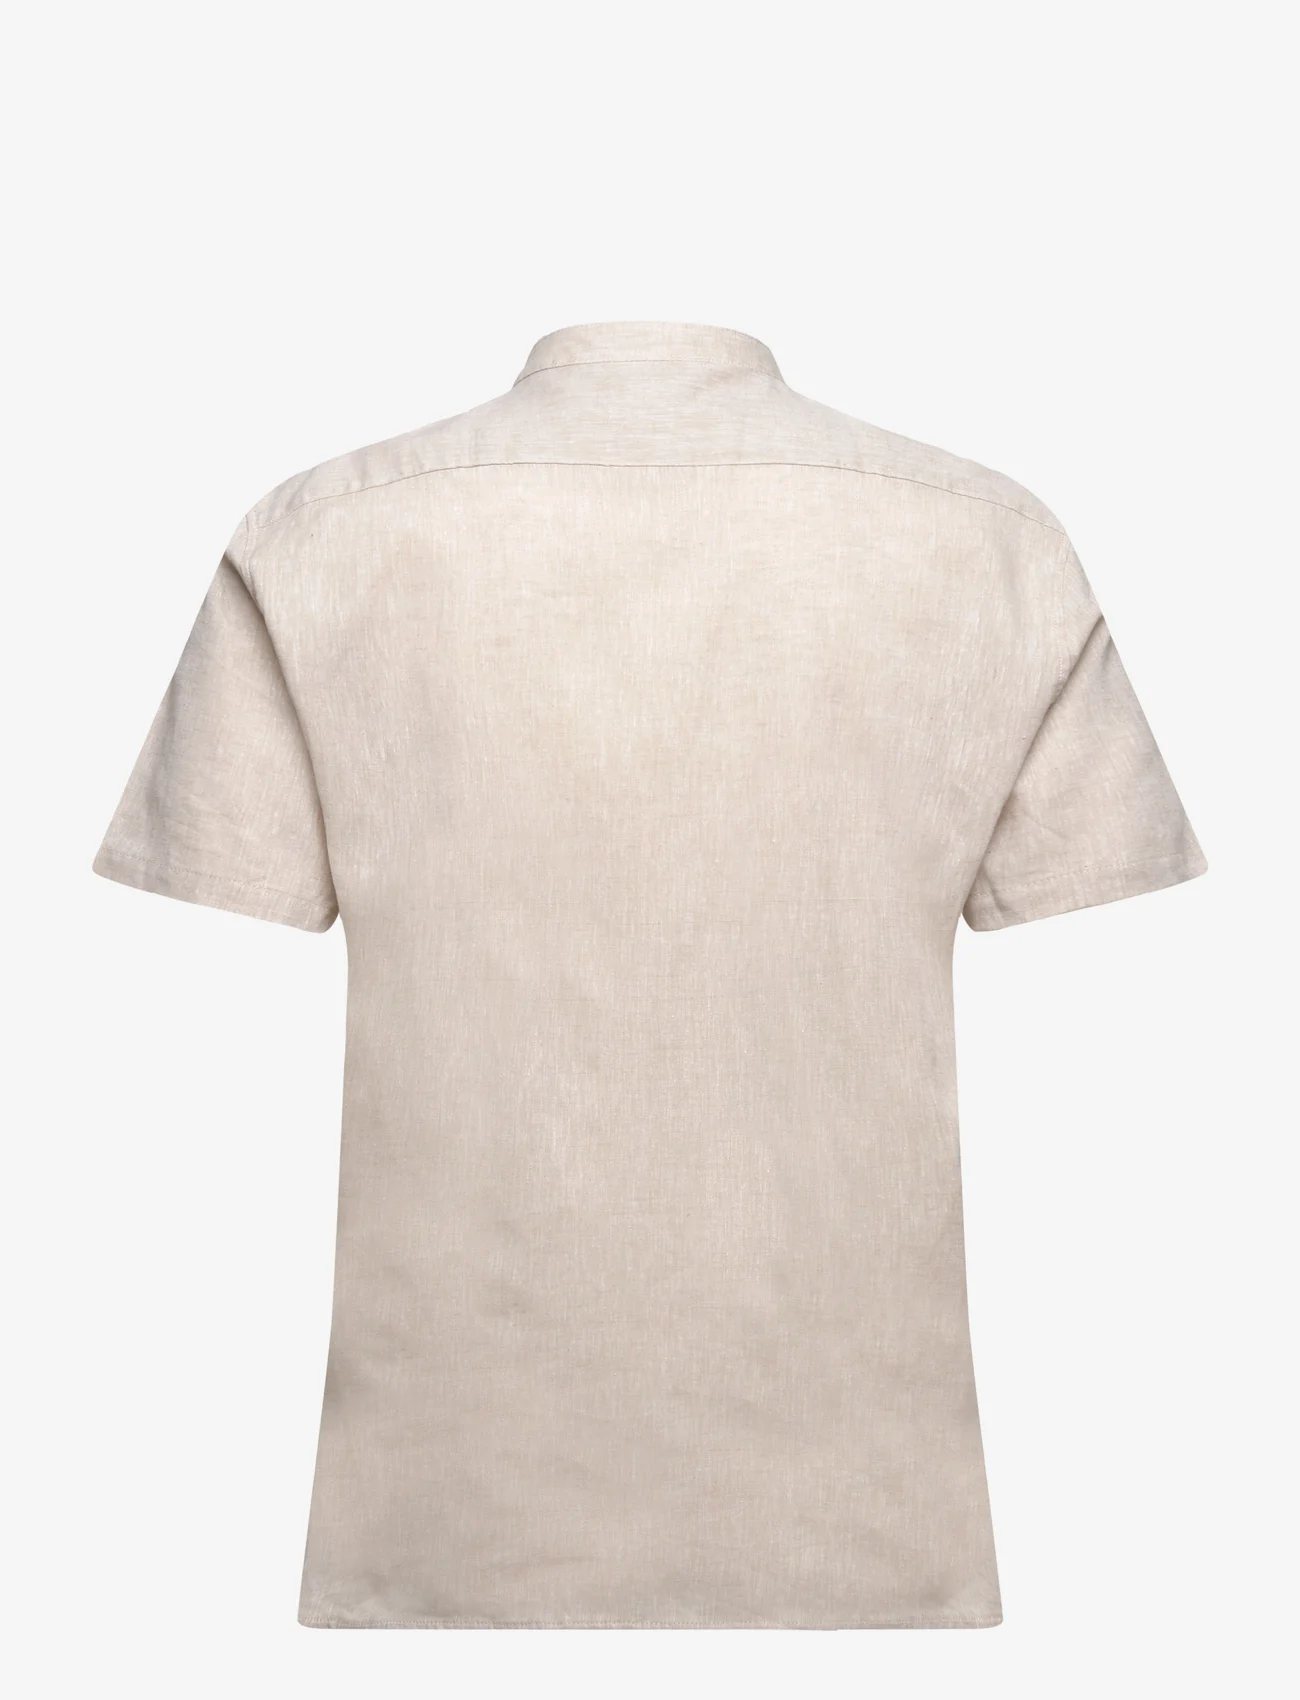 Lindbergh - Mandarin linen blend shirt S/S - lowest prices - stone - 1